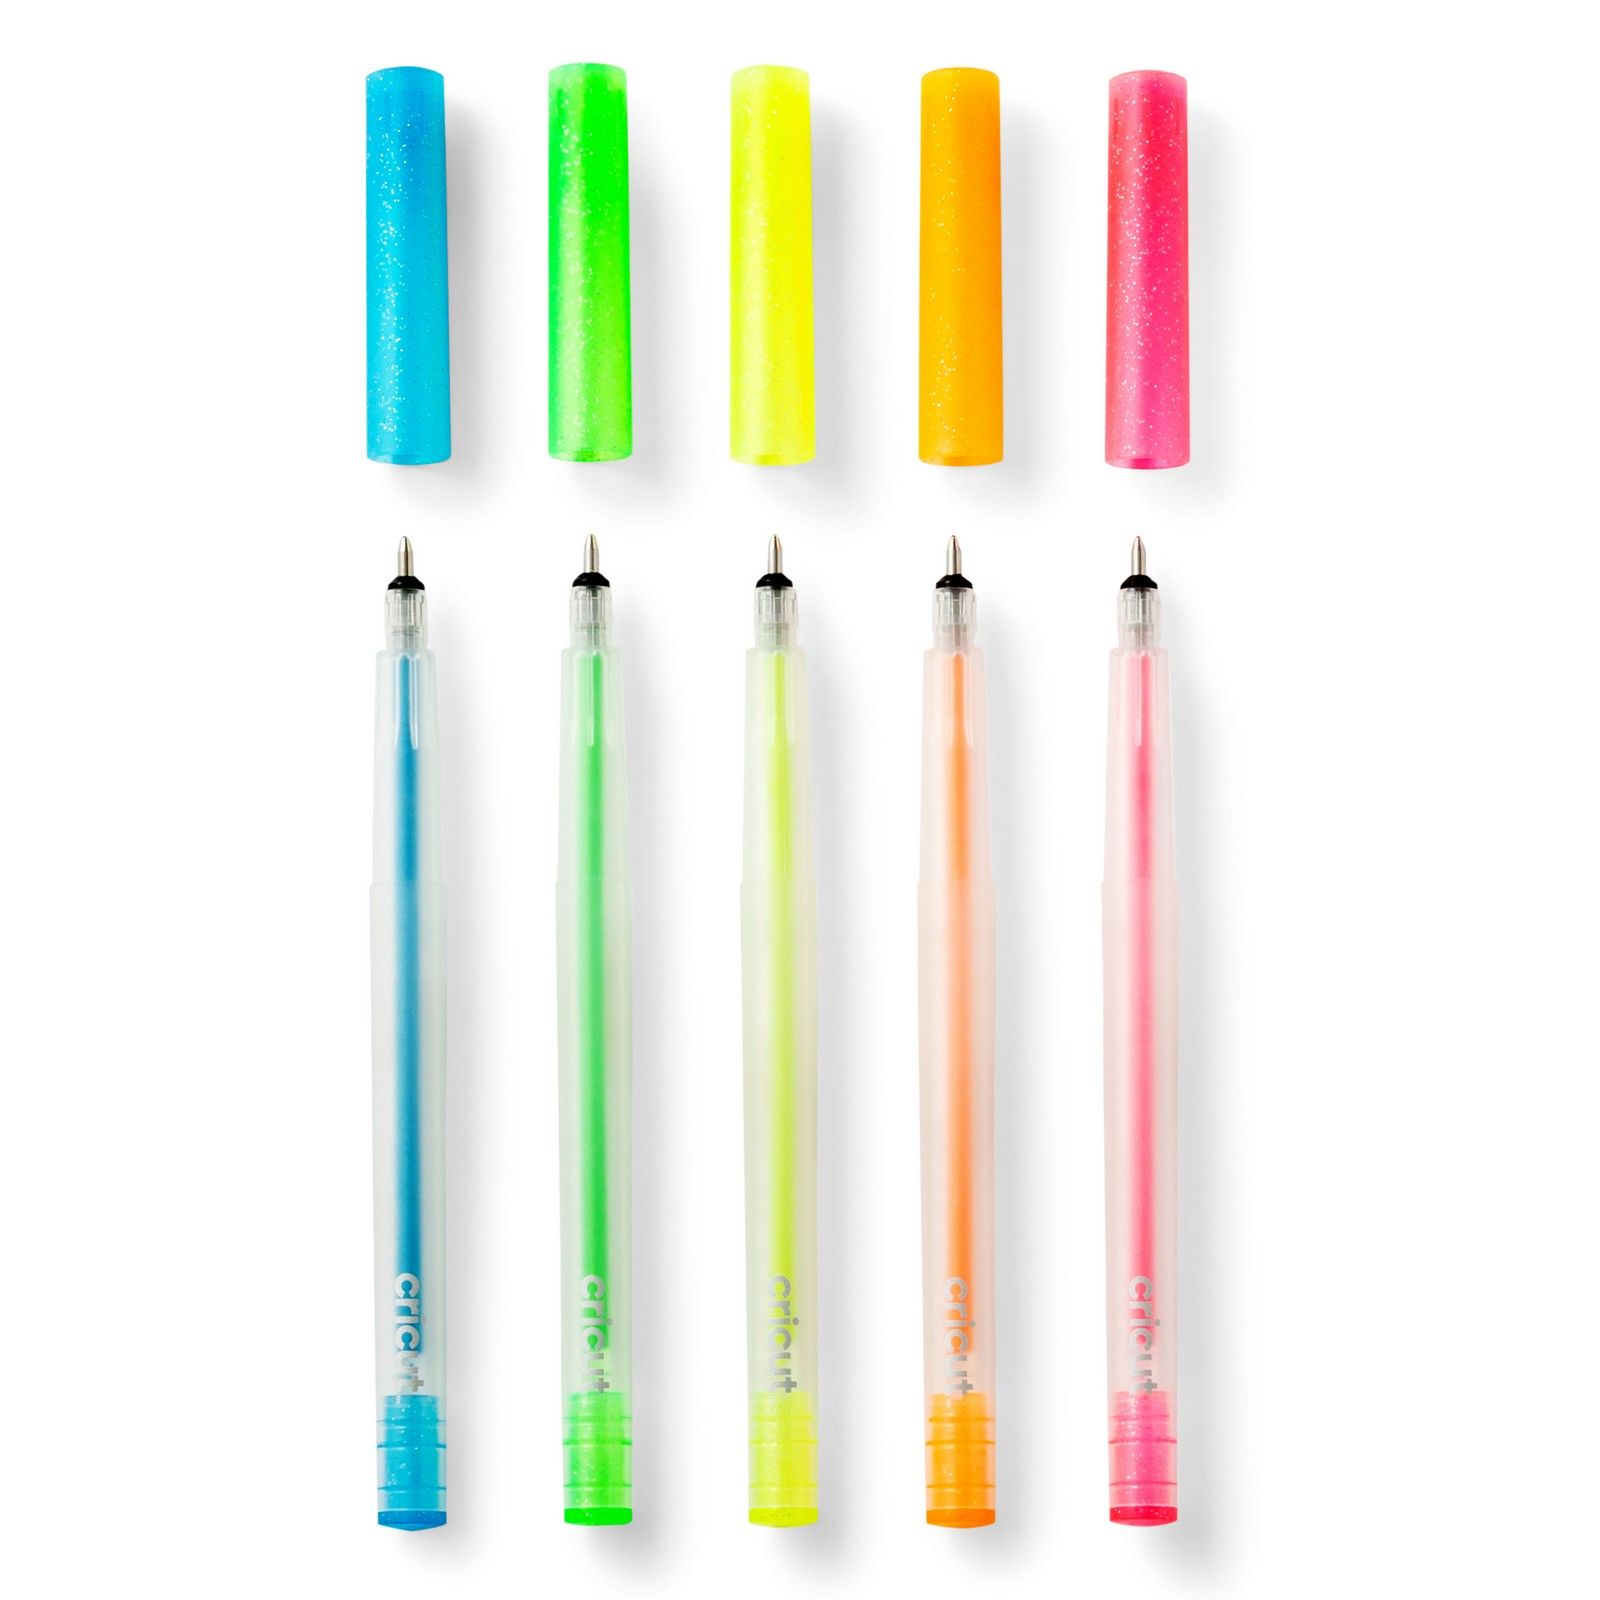 Cricut • Glitter Gel Neon pens 5-pack (Pink, Orange, Yellow, Green, Blue)